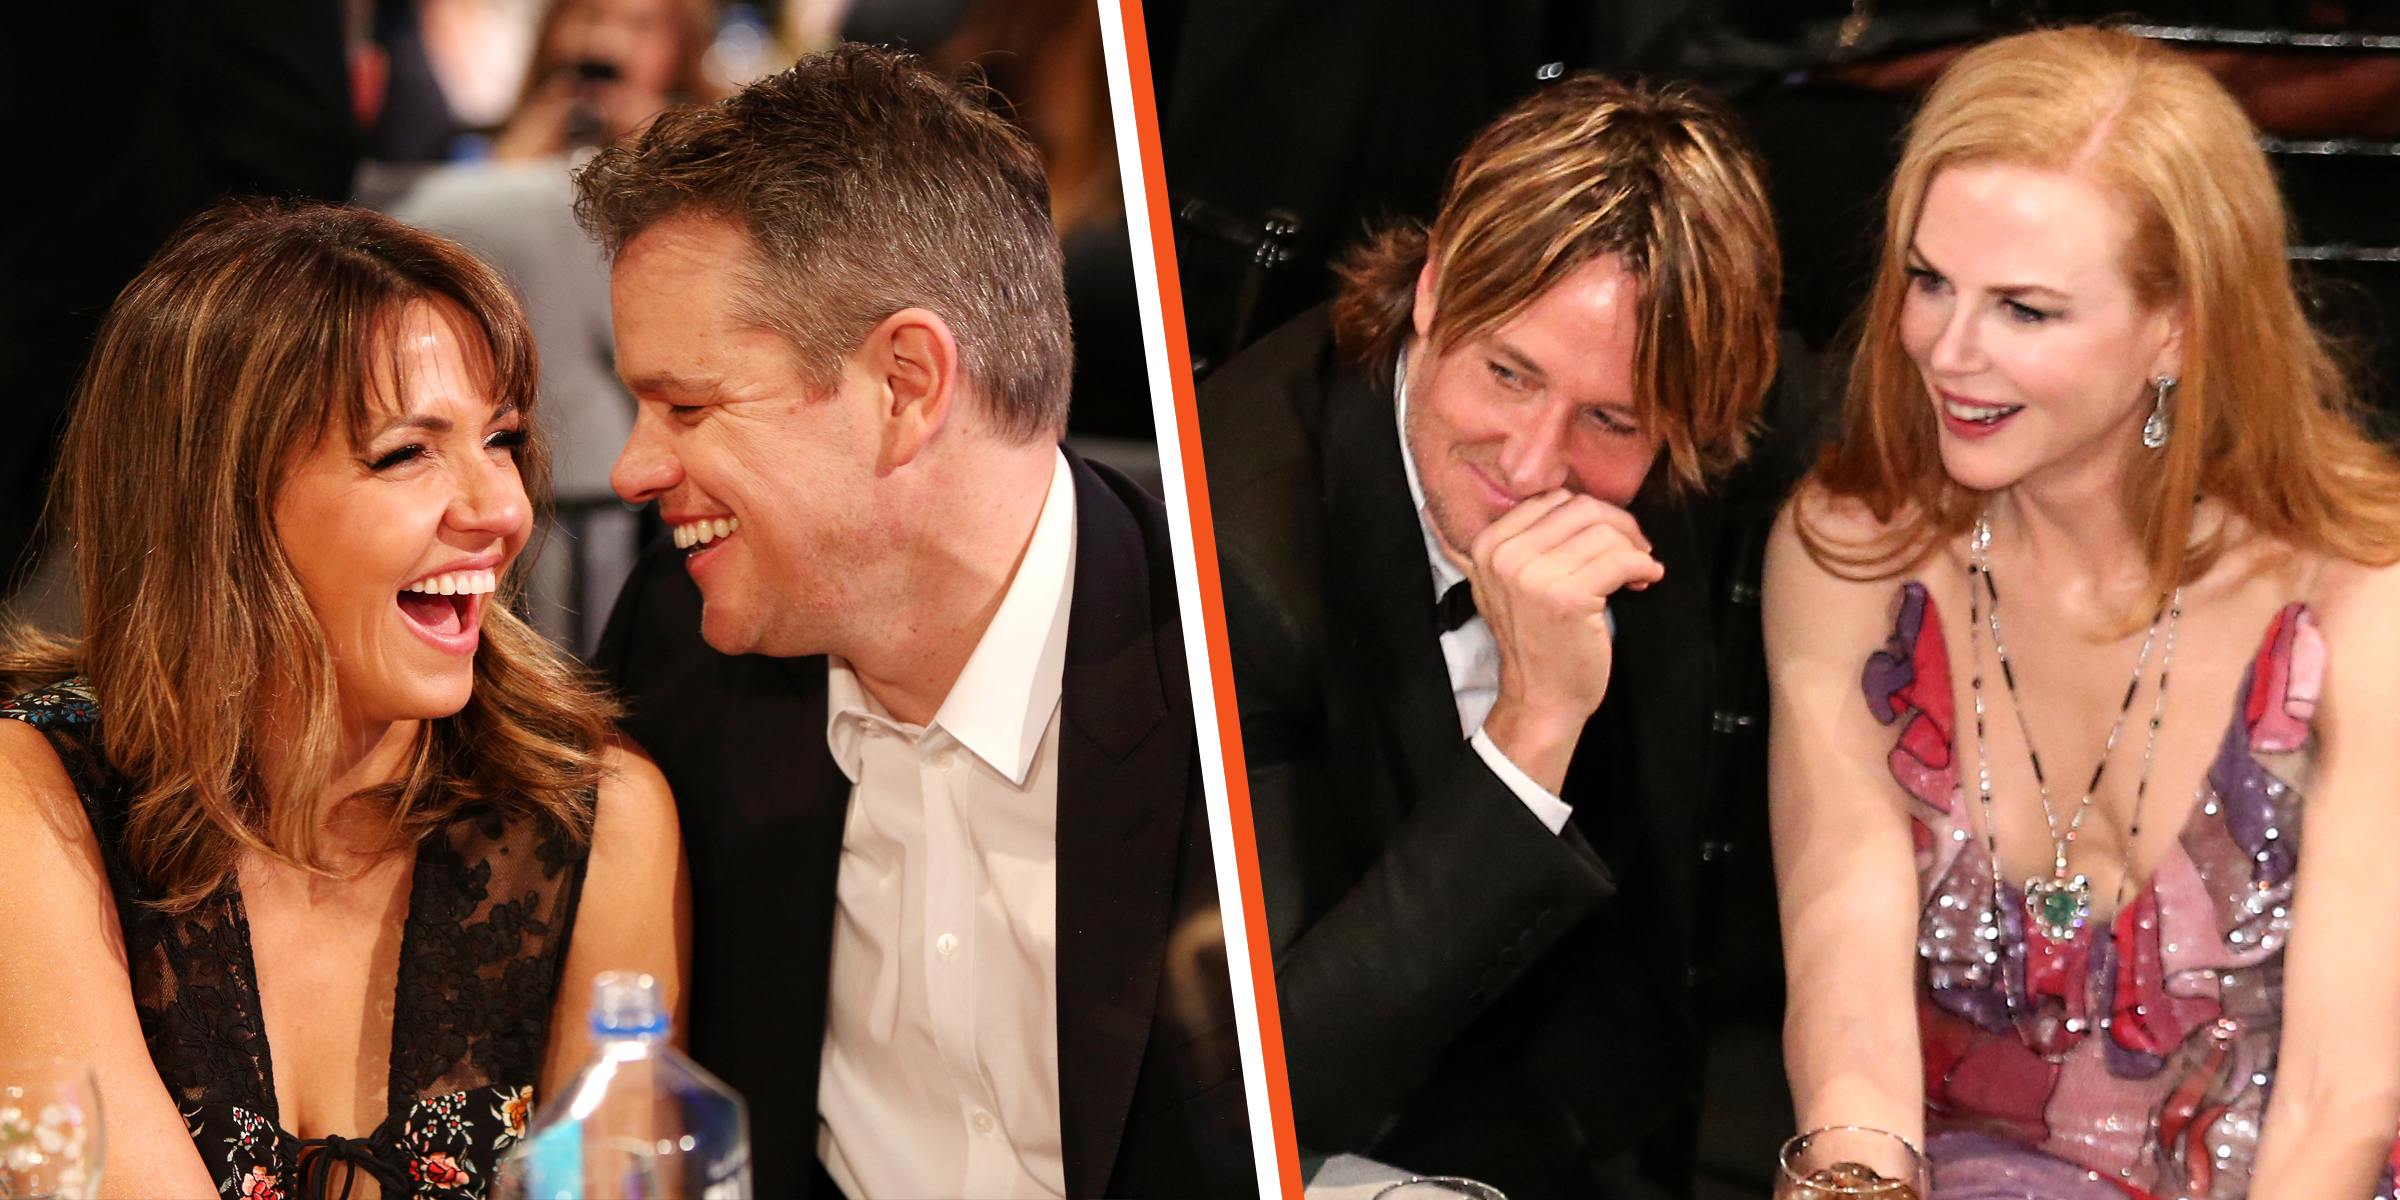 Luciana Barroso and Matt Damon | Keith Urban and Nicole Kidman | Source: Getty Images